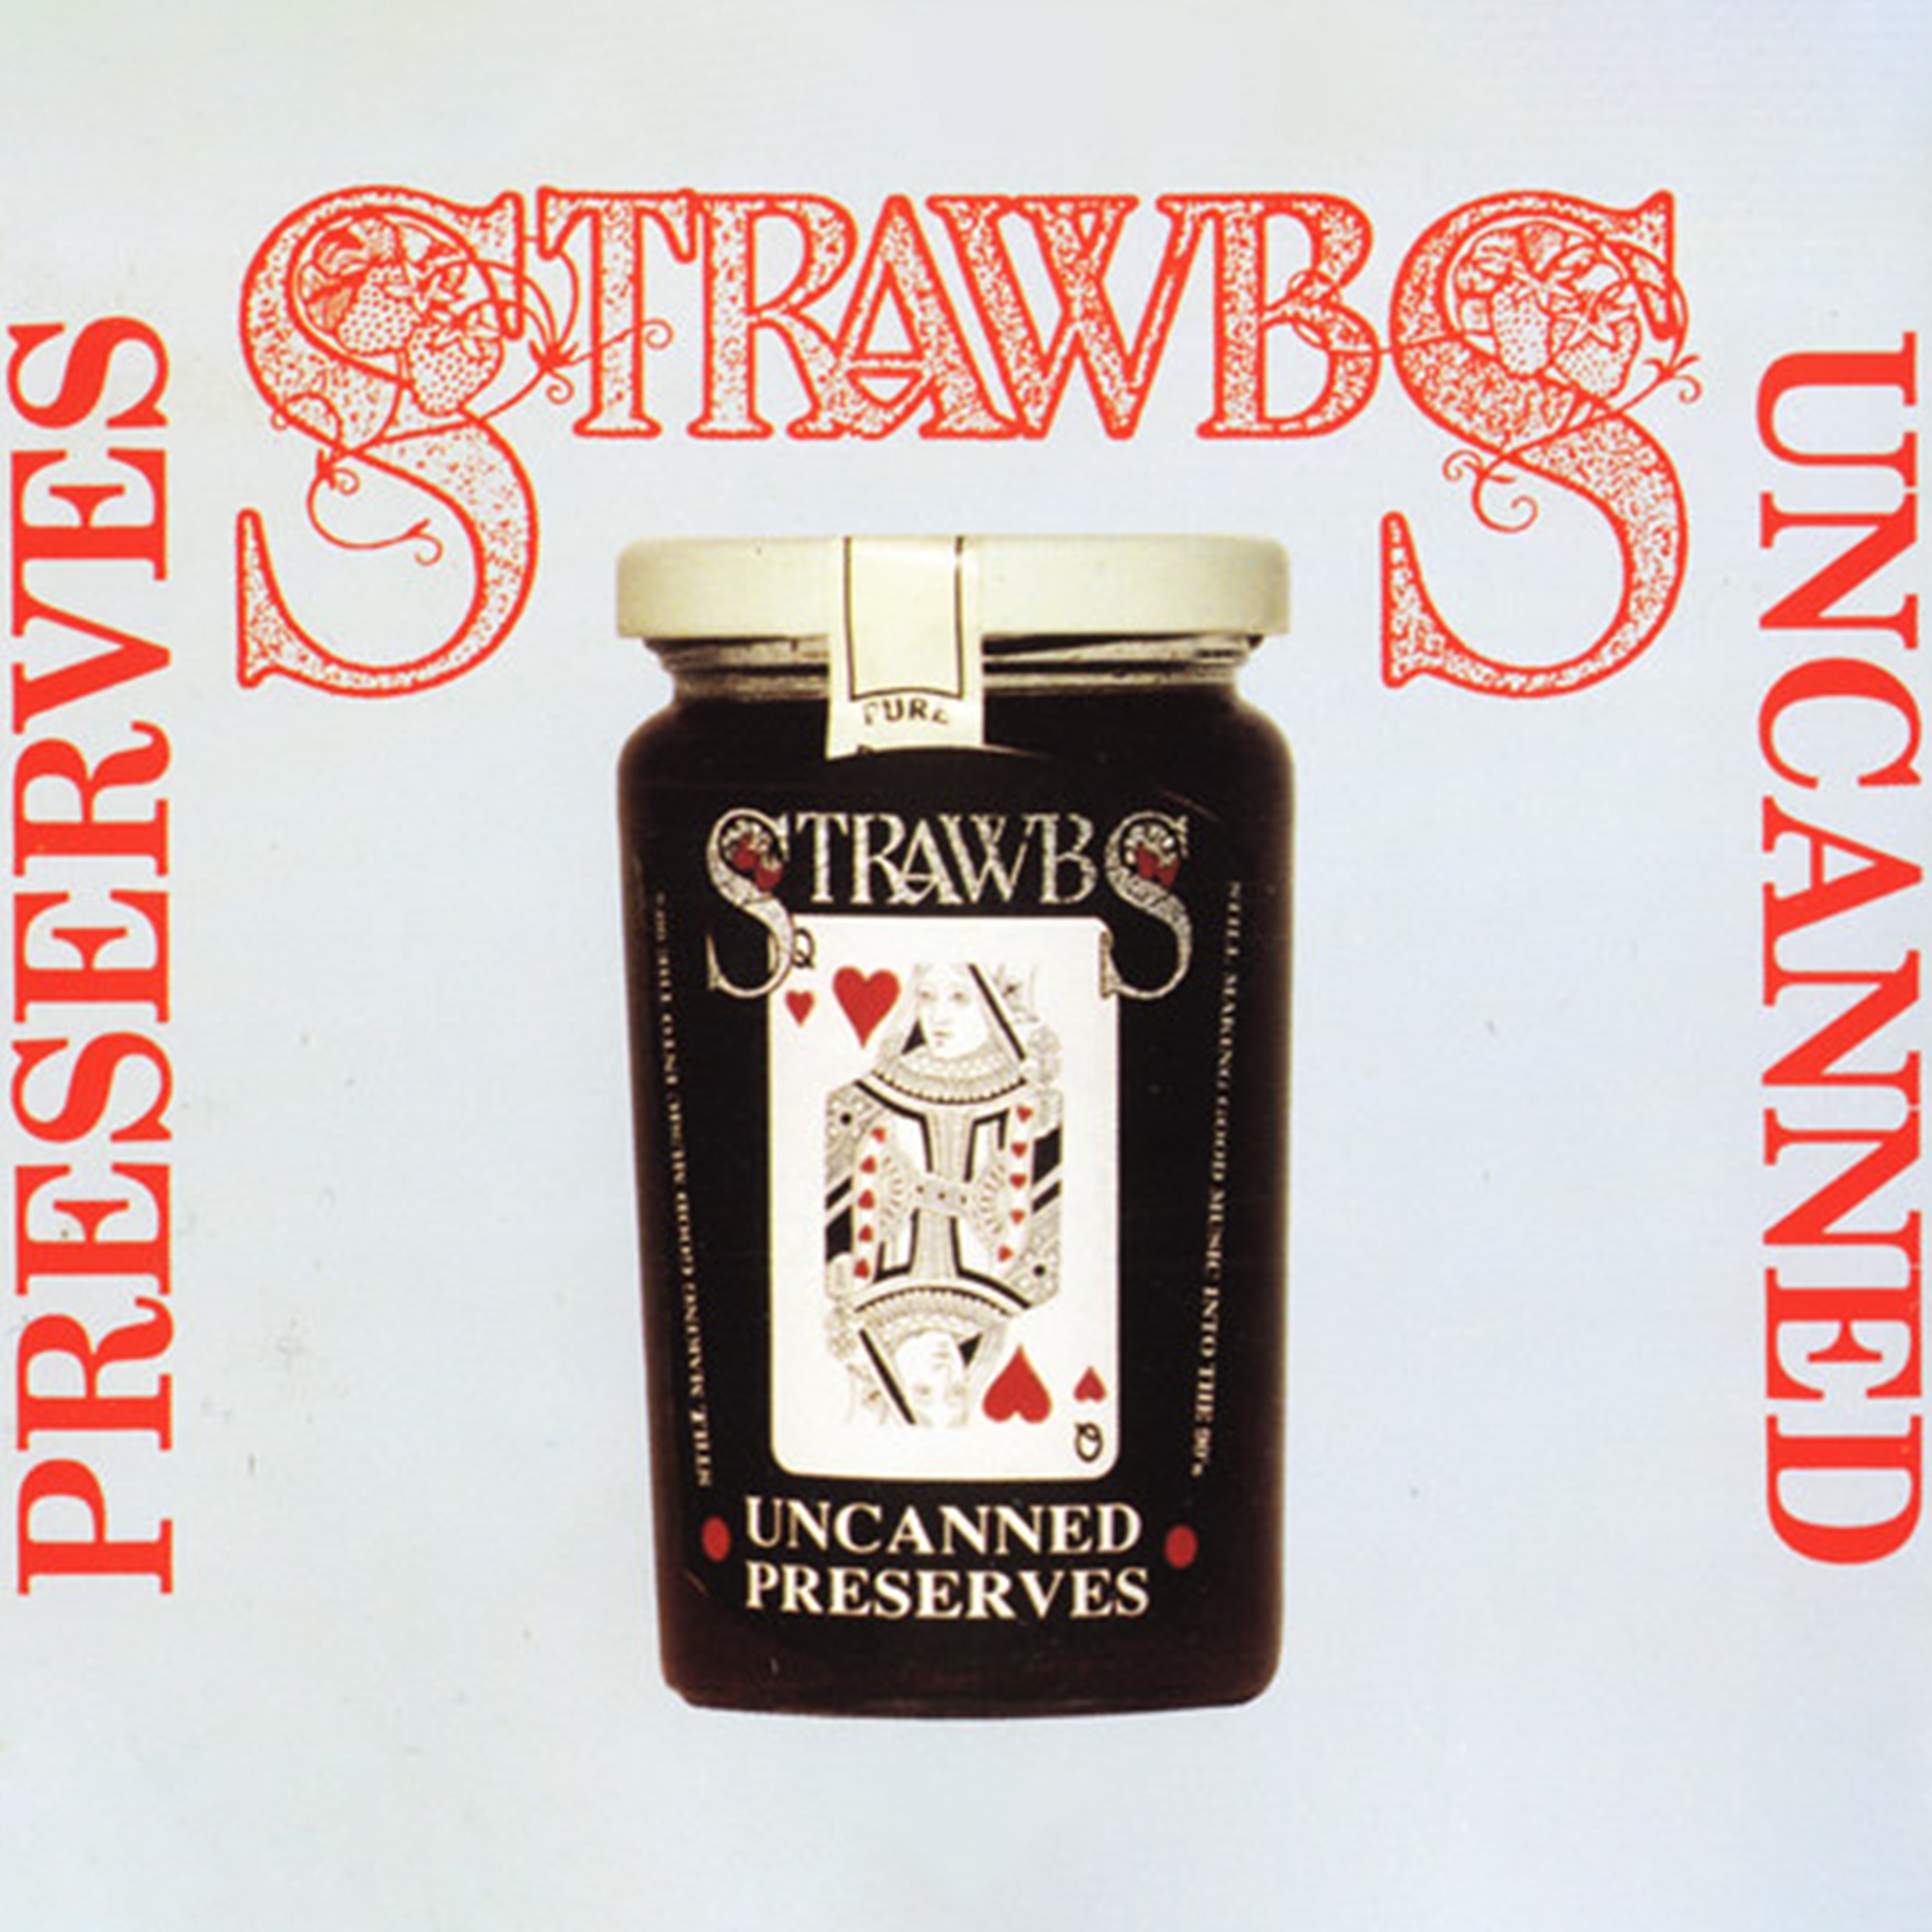 Strawbs - 2023 - Preserves Uncanned